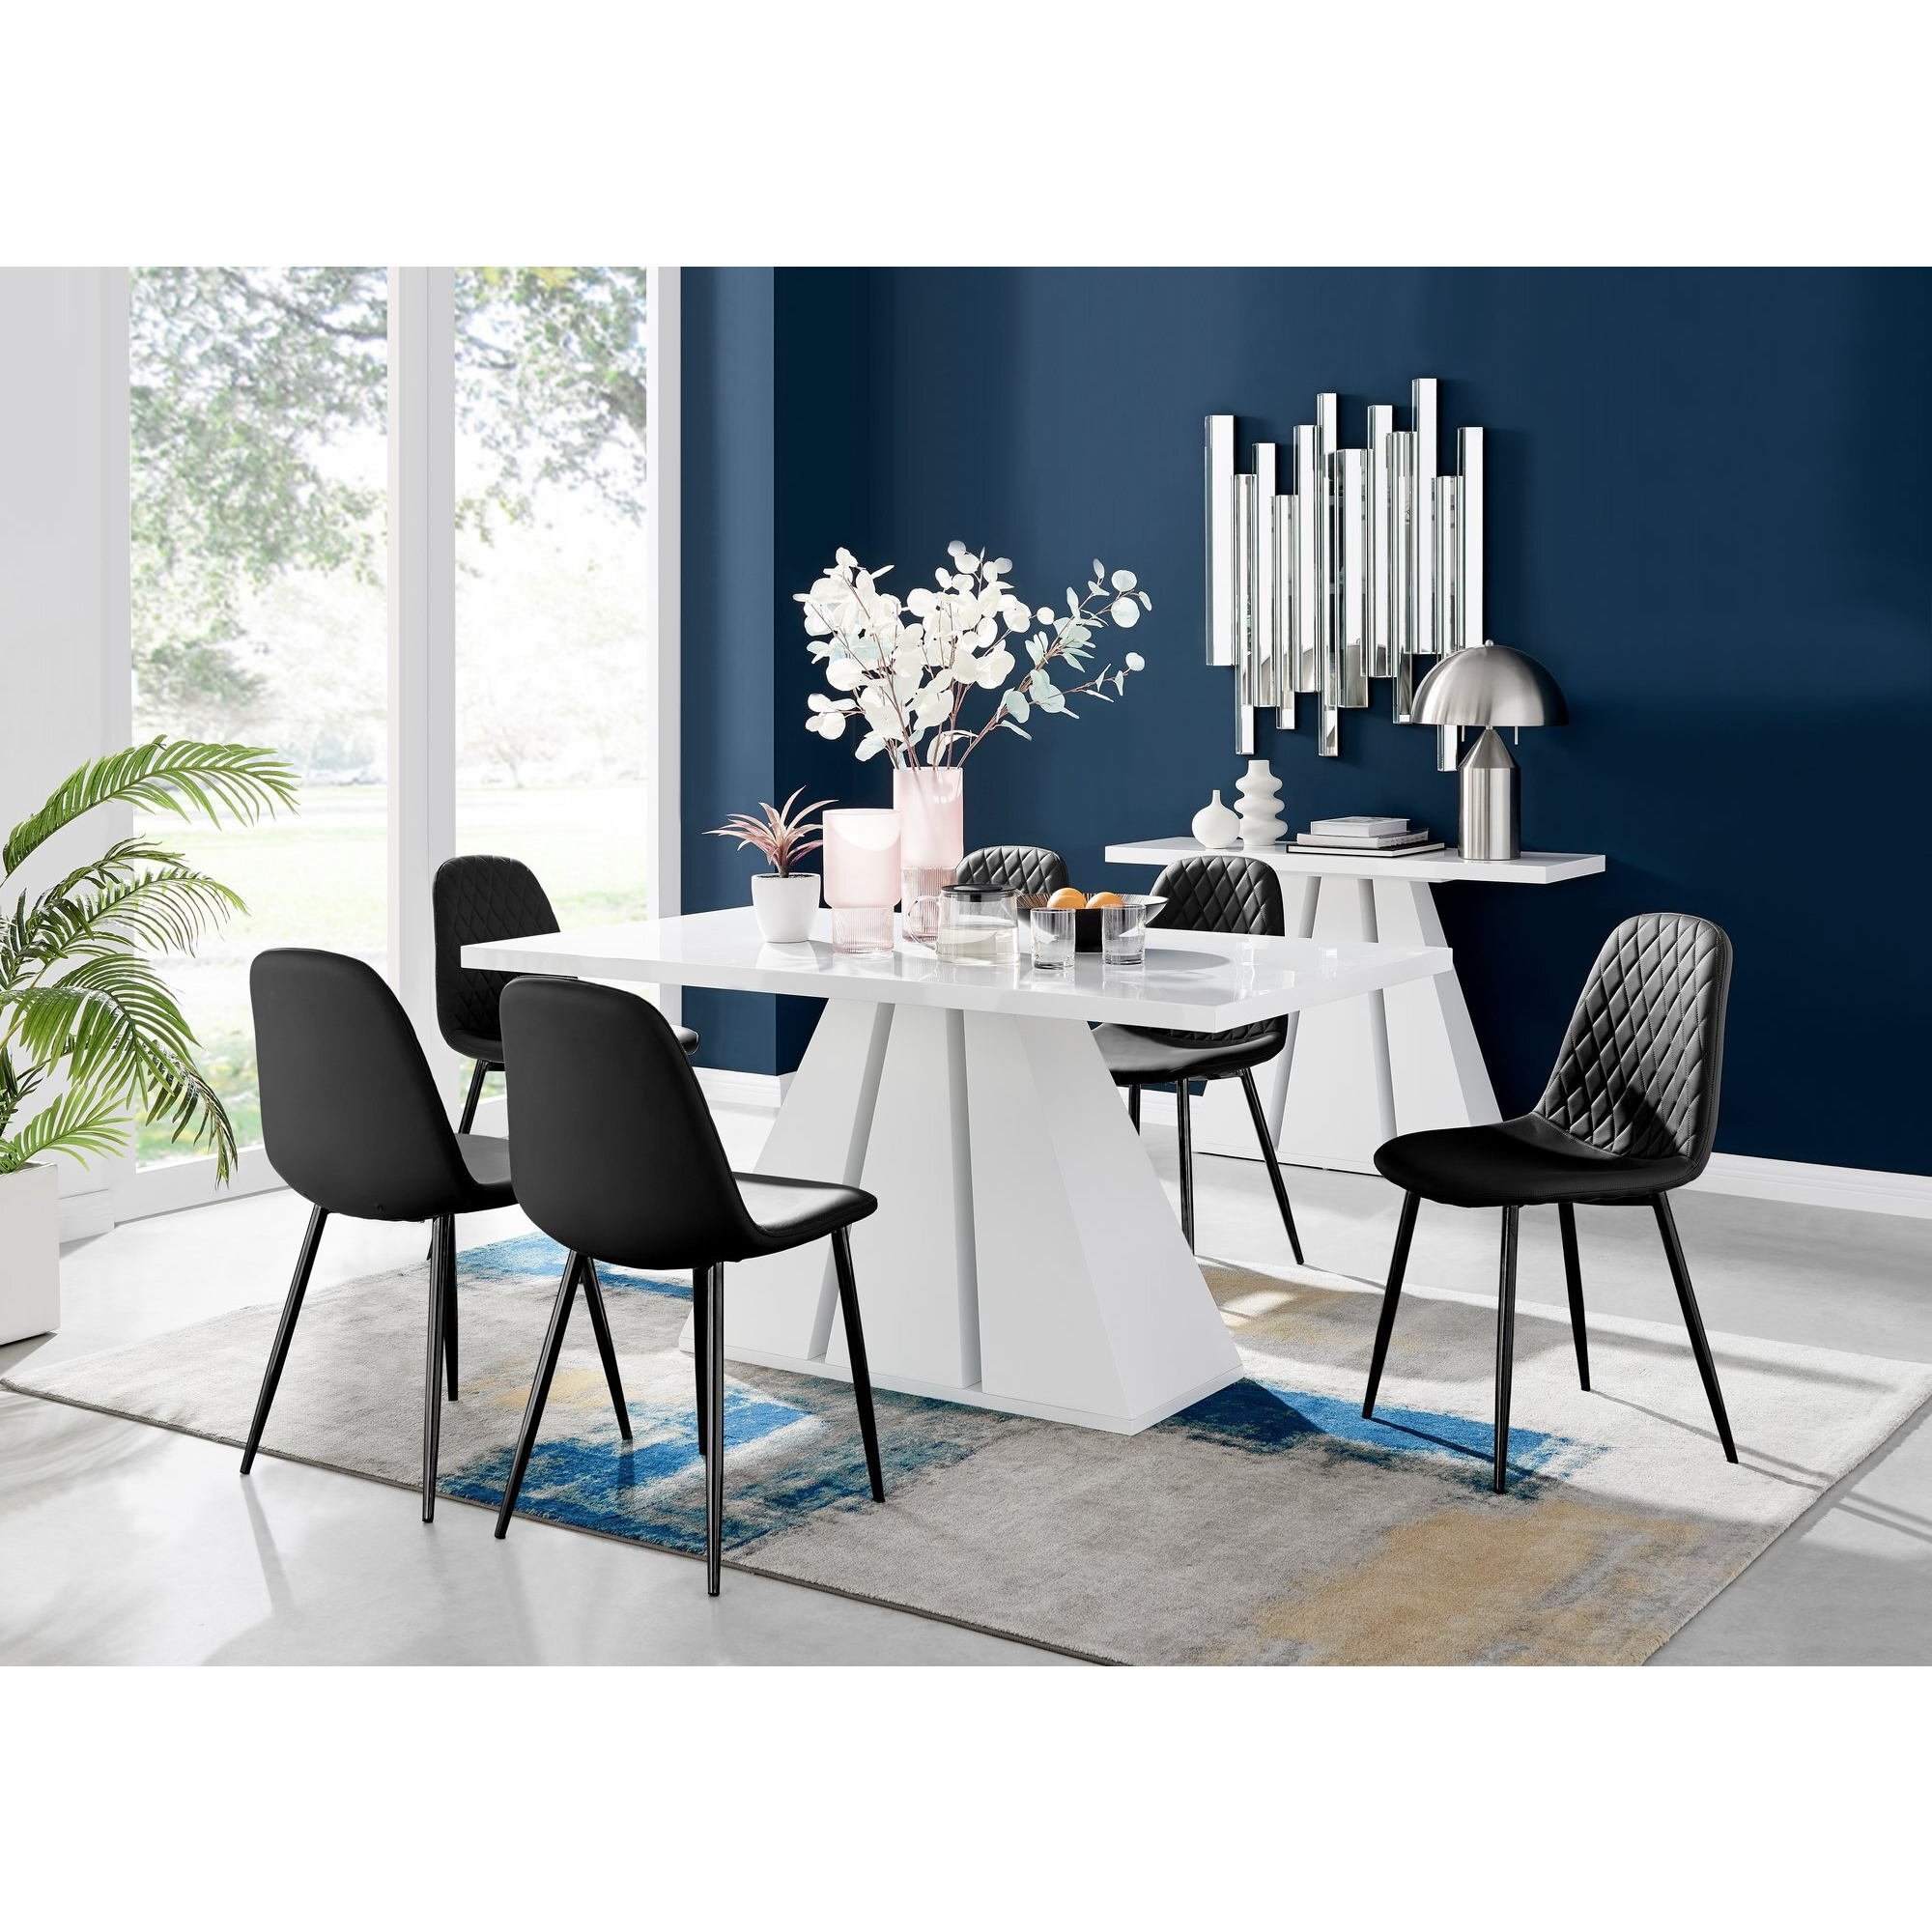 Athens White High Gloss Dining Table & 6 Corona Black Leg Chairs